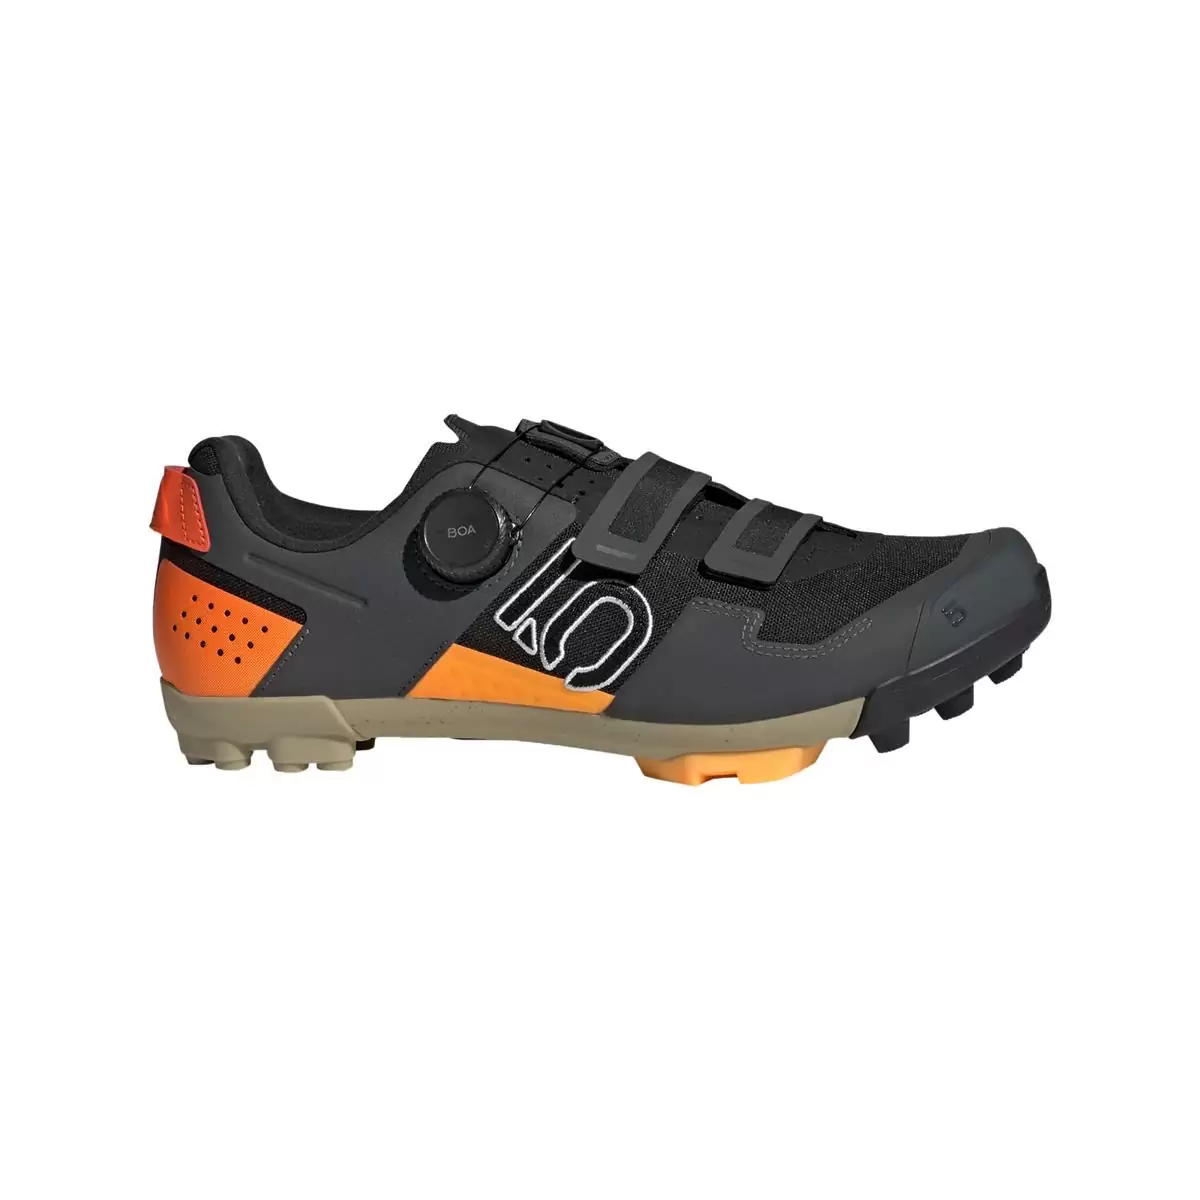 Clip 5.10 Kestrel Boa MTB Shoes Black/Orange Size 43 - image